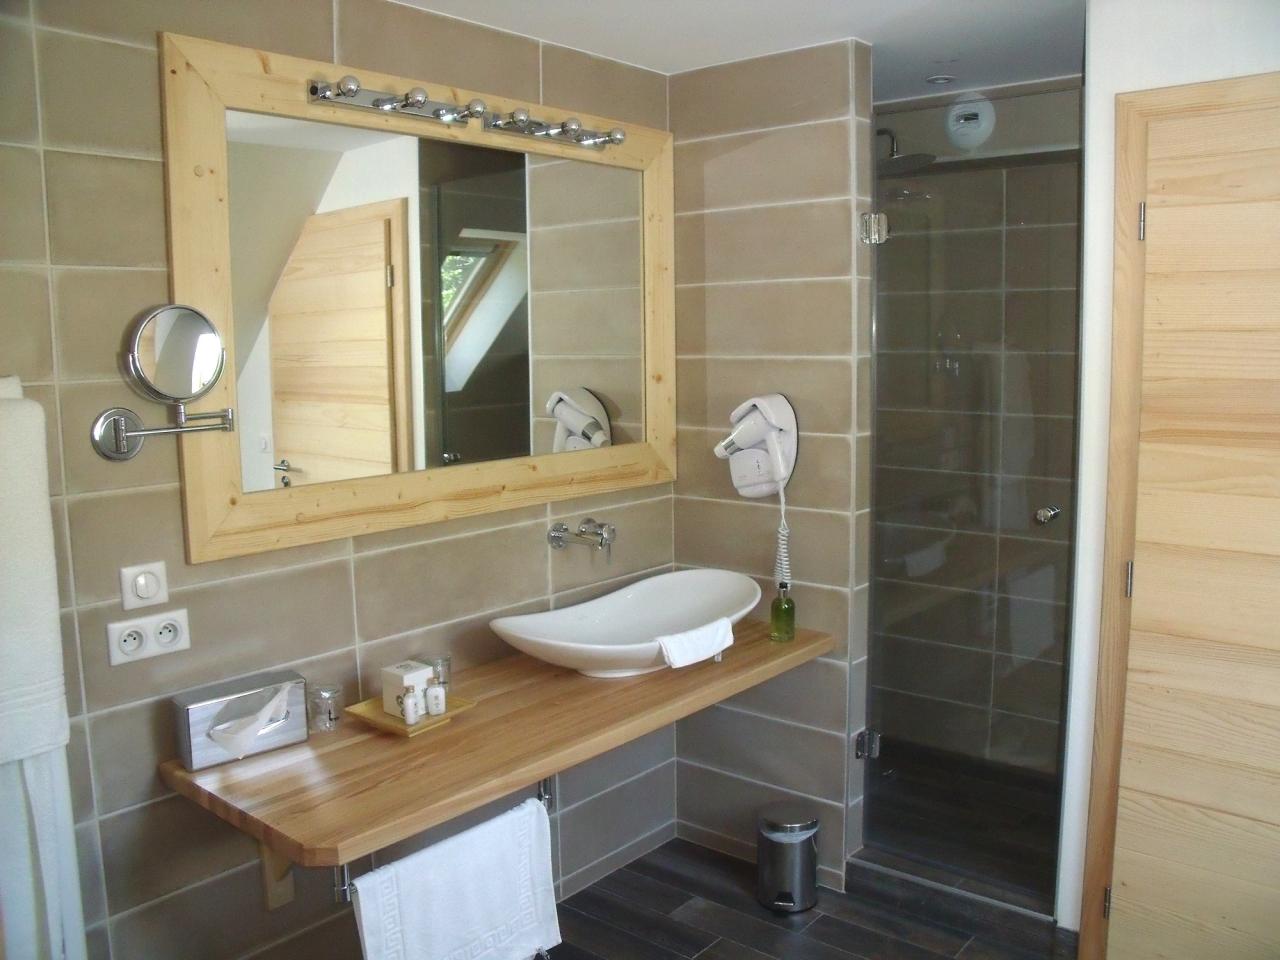 Salle de bain et miroir